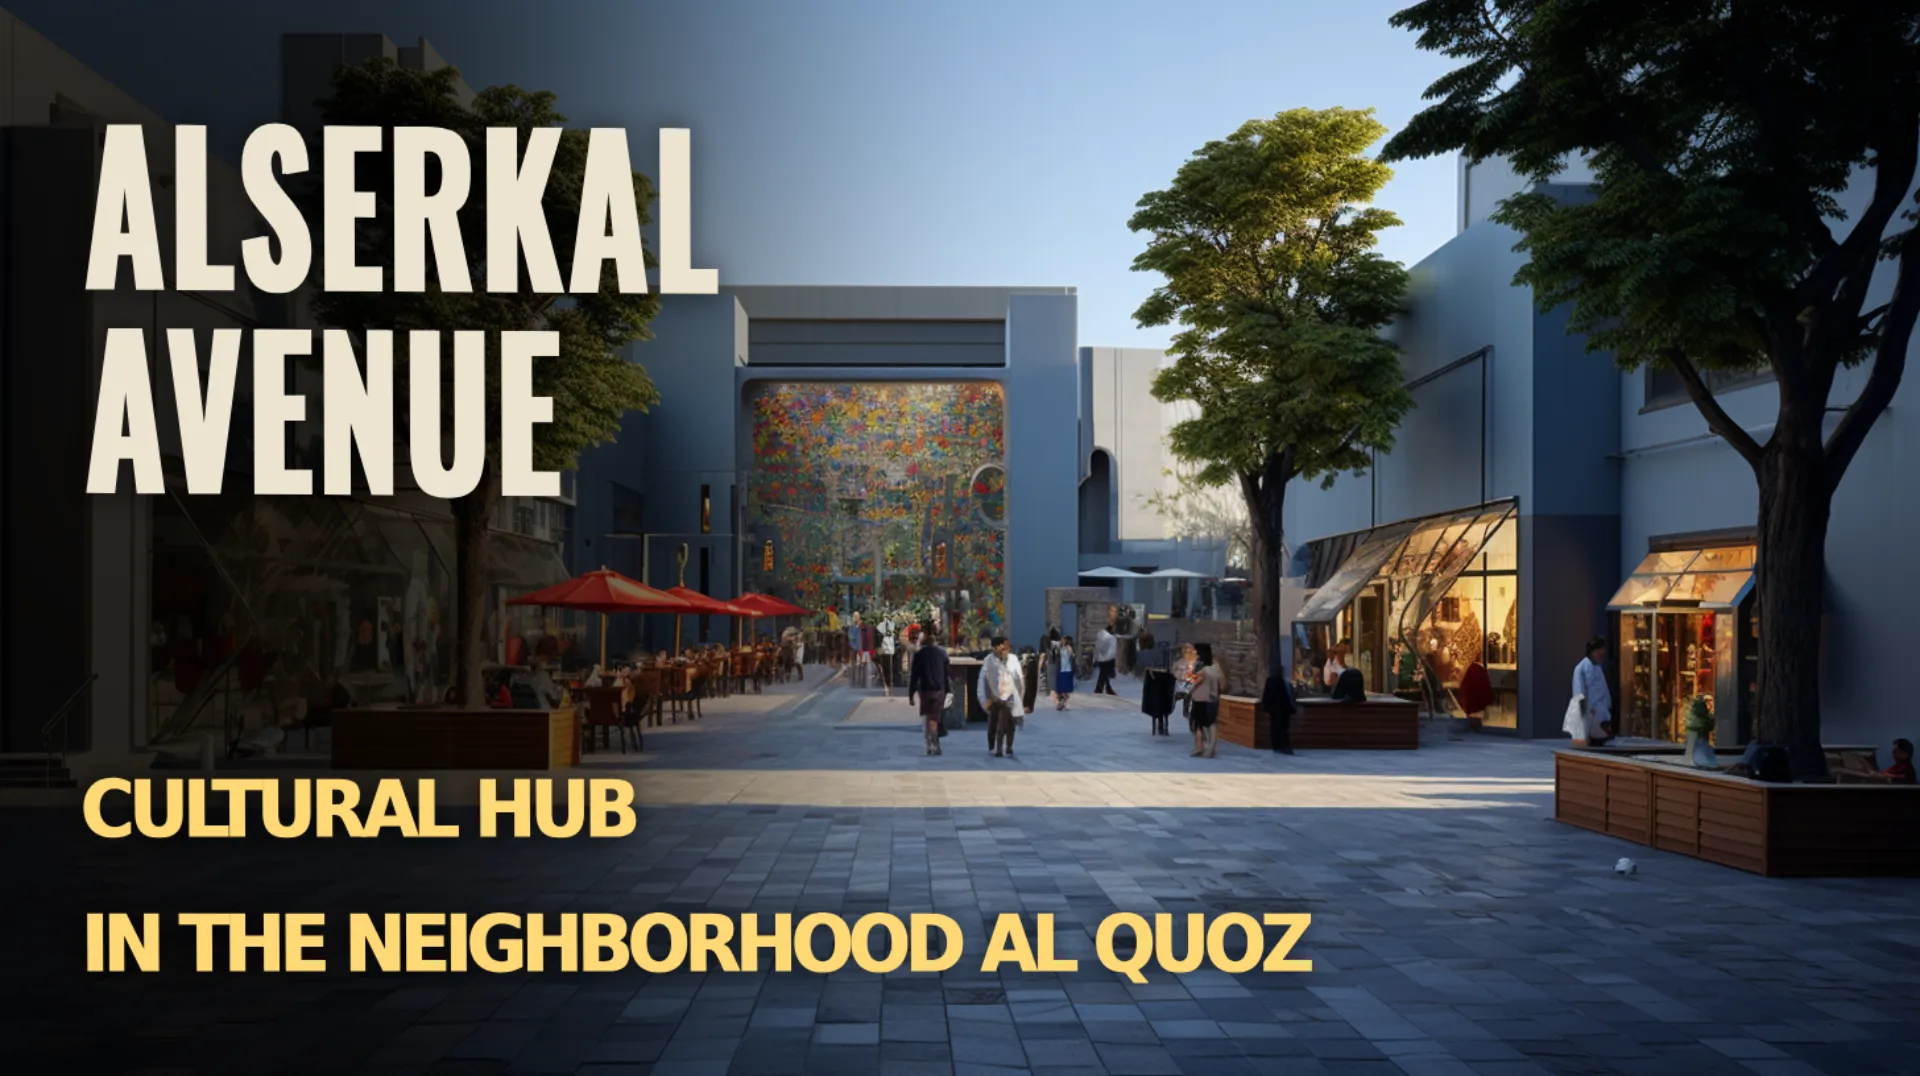 Alserkal Avenue: A vibrant cultural hub in Dubai, showcasing contemporary art, galleries, and creative spaces